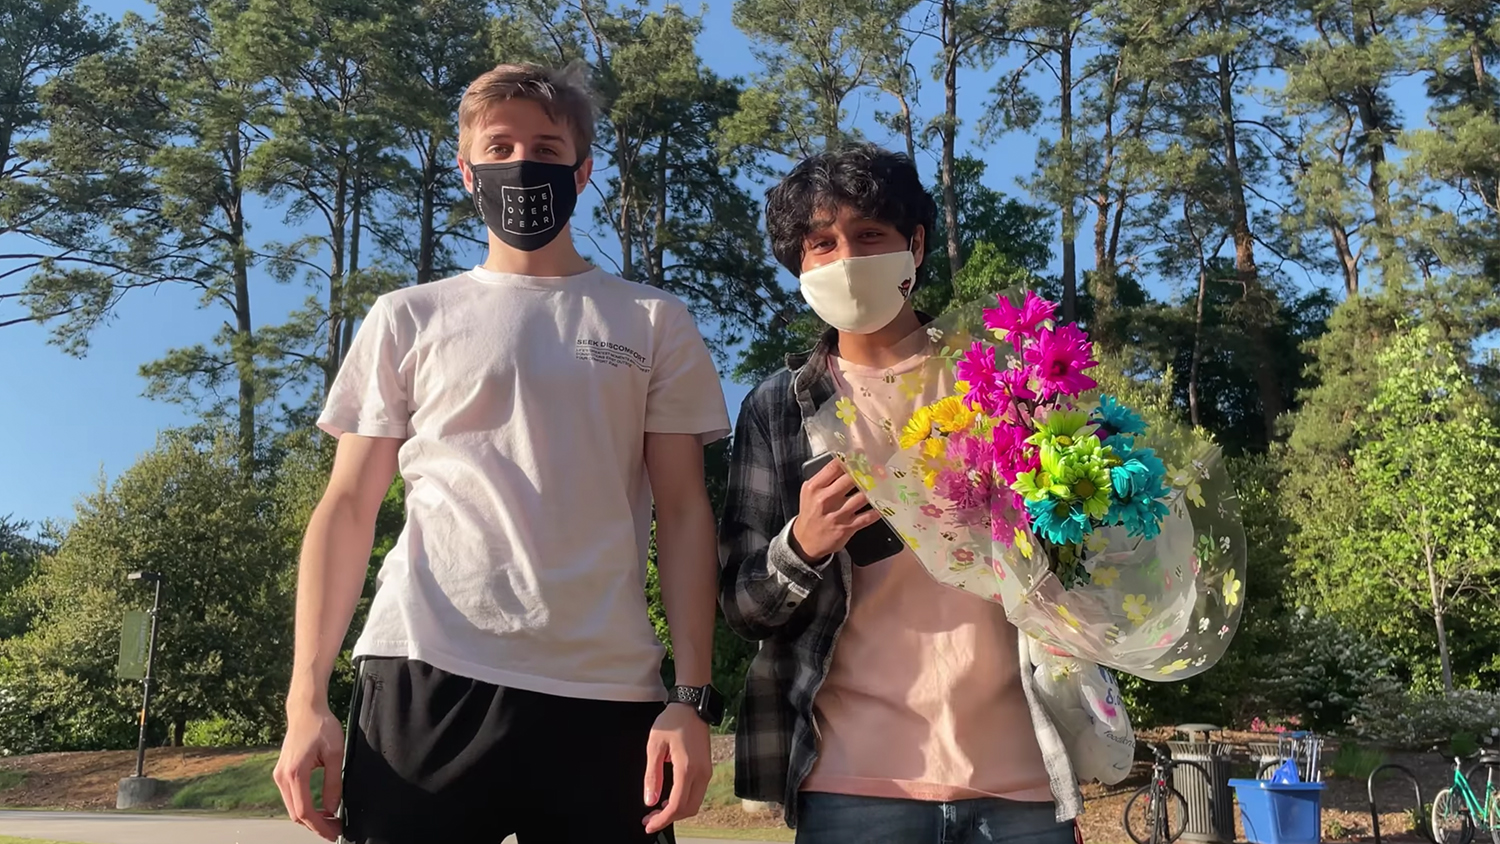 Sean Deardorff and Tejas Kakade wearing masks, holding flowers in an outdoor setting